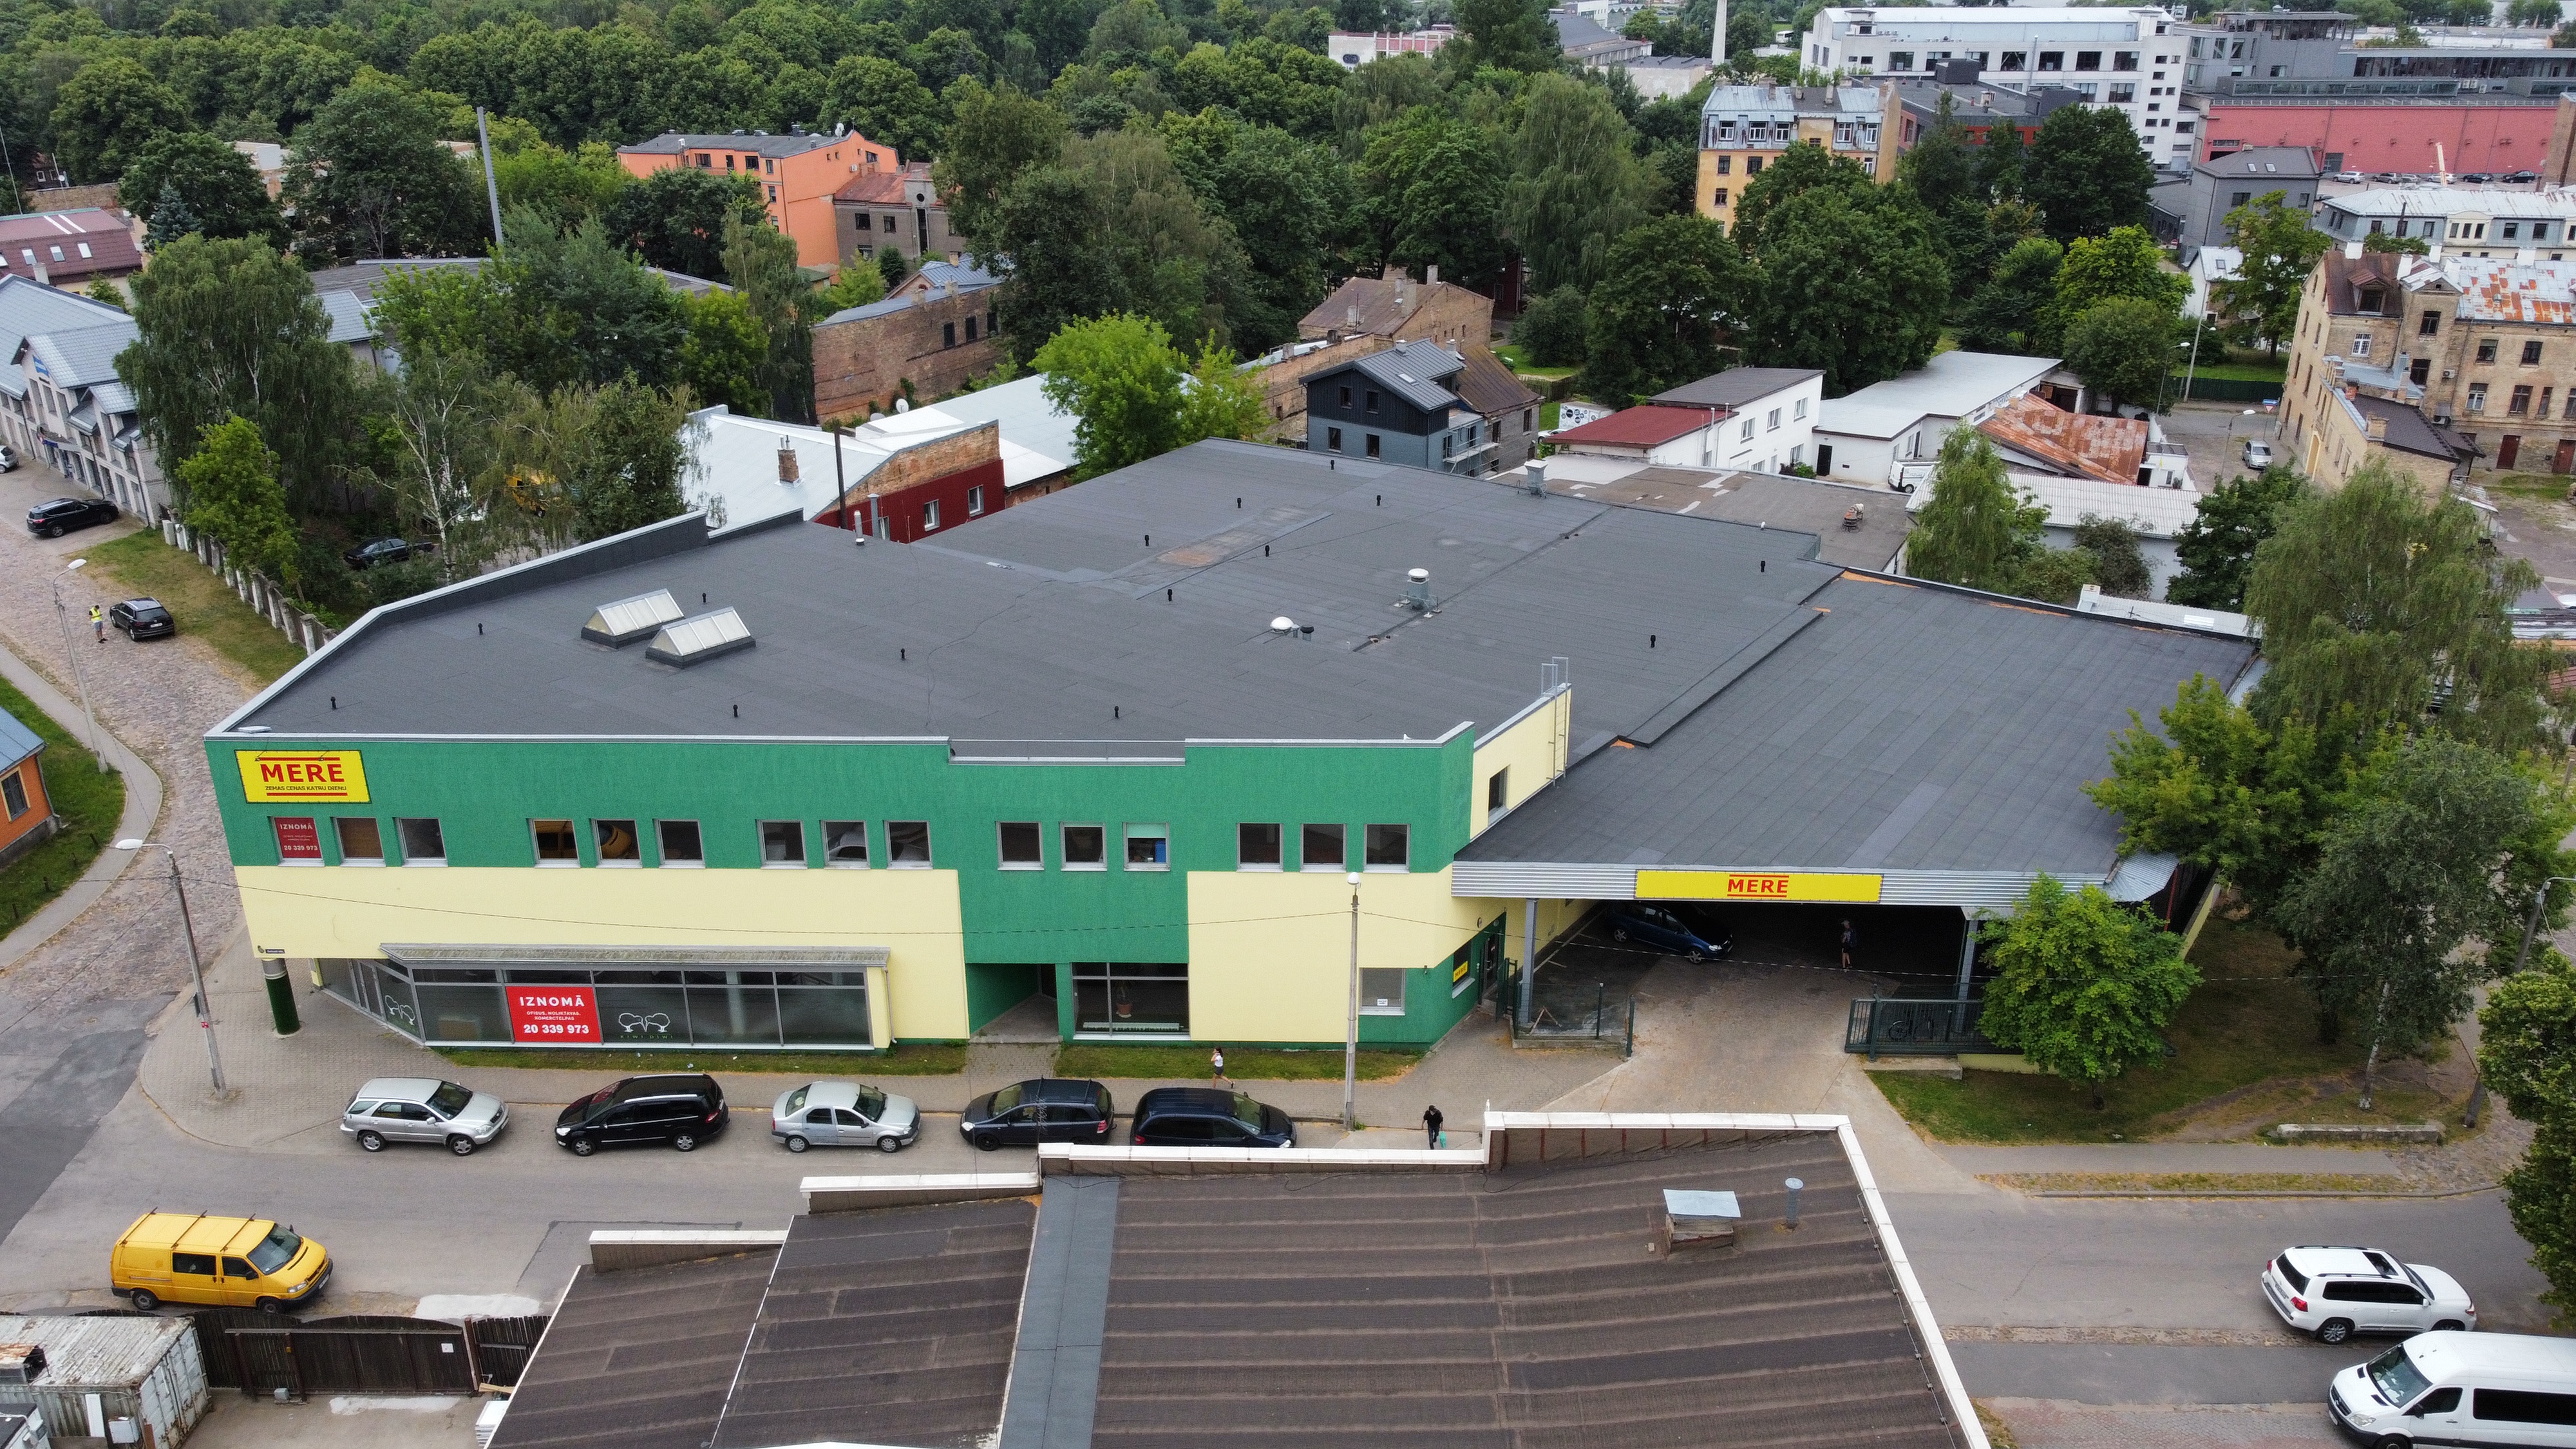 Warehouse for sale, Līksnas street - Image 1